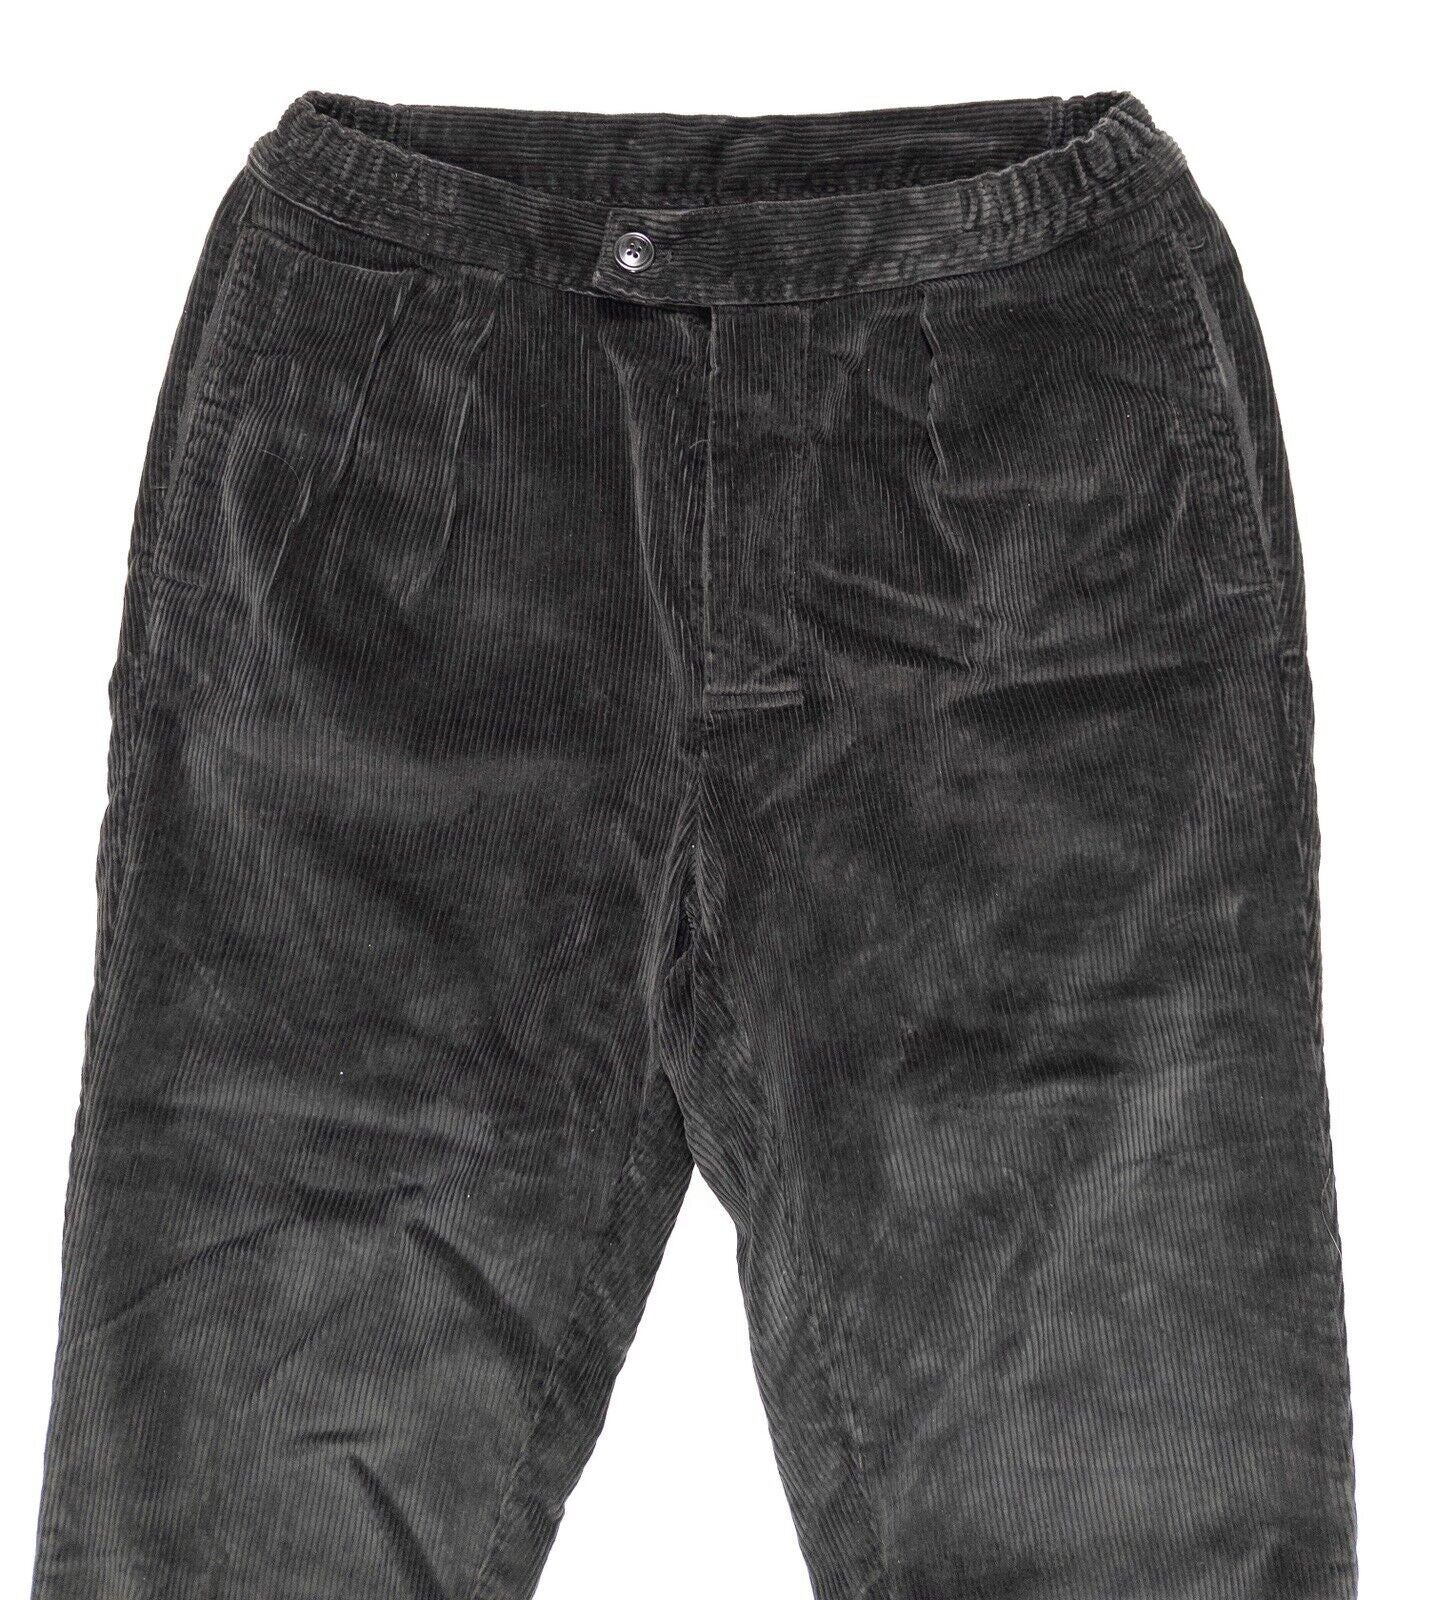 BARBOUR Men's Black Jumbo Cord Trousers Size UK W30